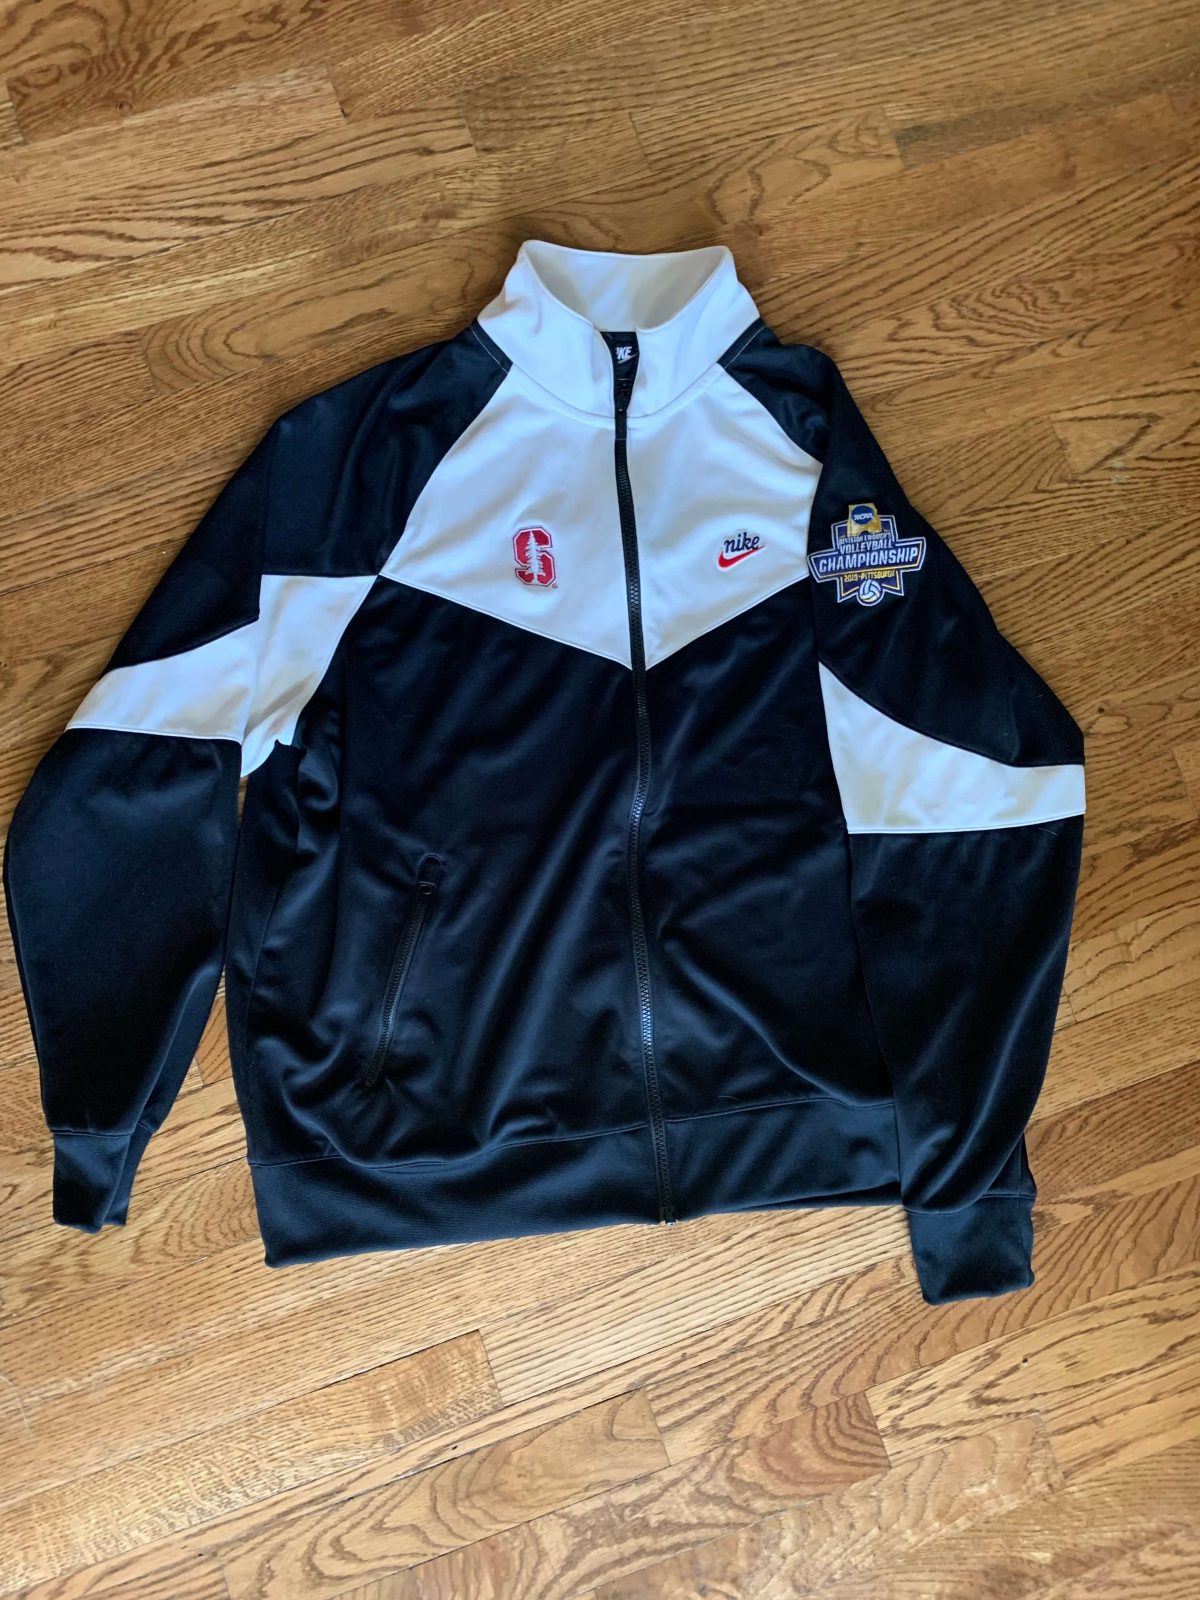 Jenna Gray Stanford Volleyball NCAA Championship Nike Jacket : NARP ...